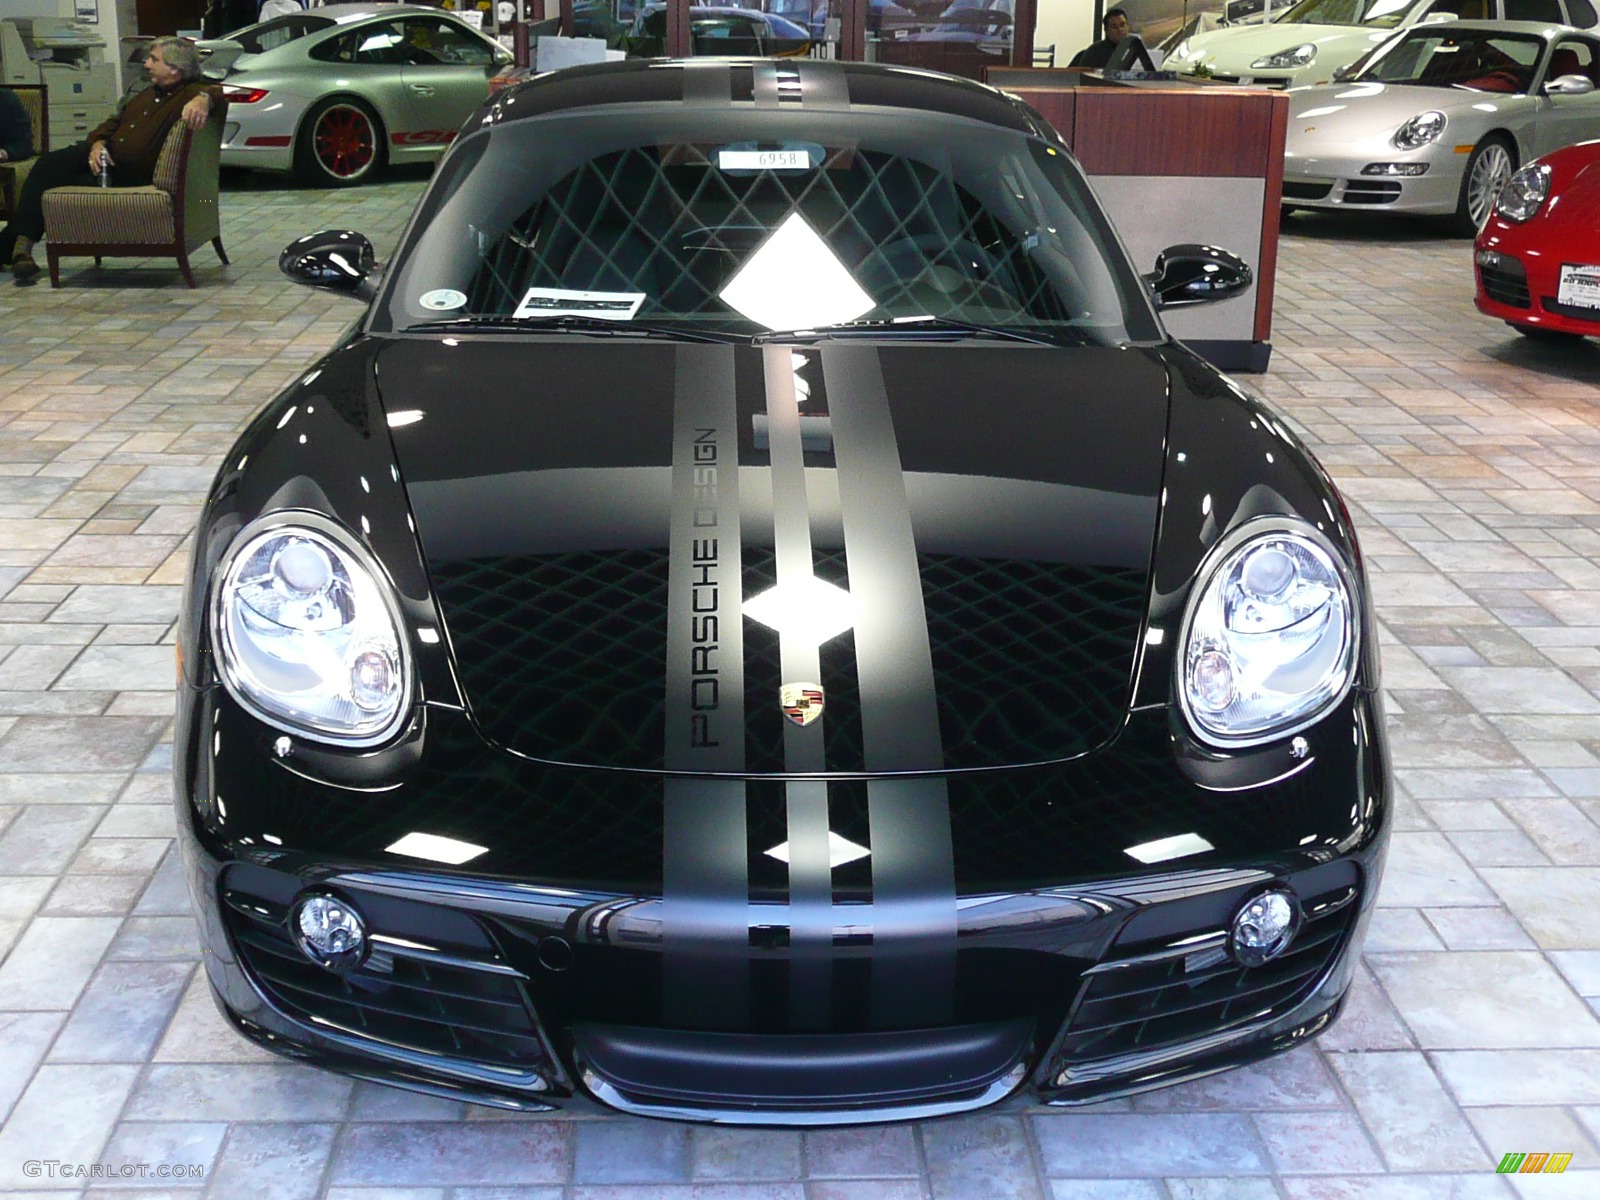 2008 Porsche Cayman S Porsche Design Edition 1, Black / Black, Front 2008 Porsche Cayman S Porsche Design Edition 1 Parts